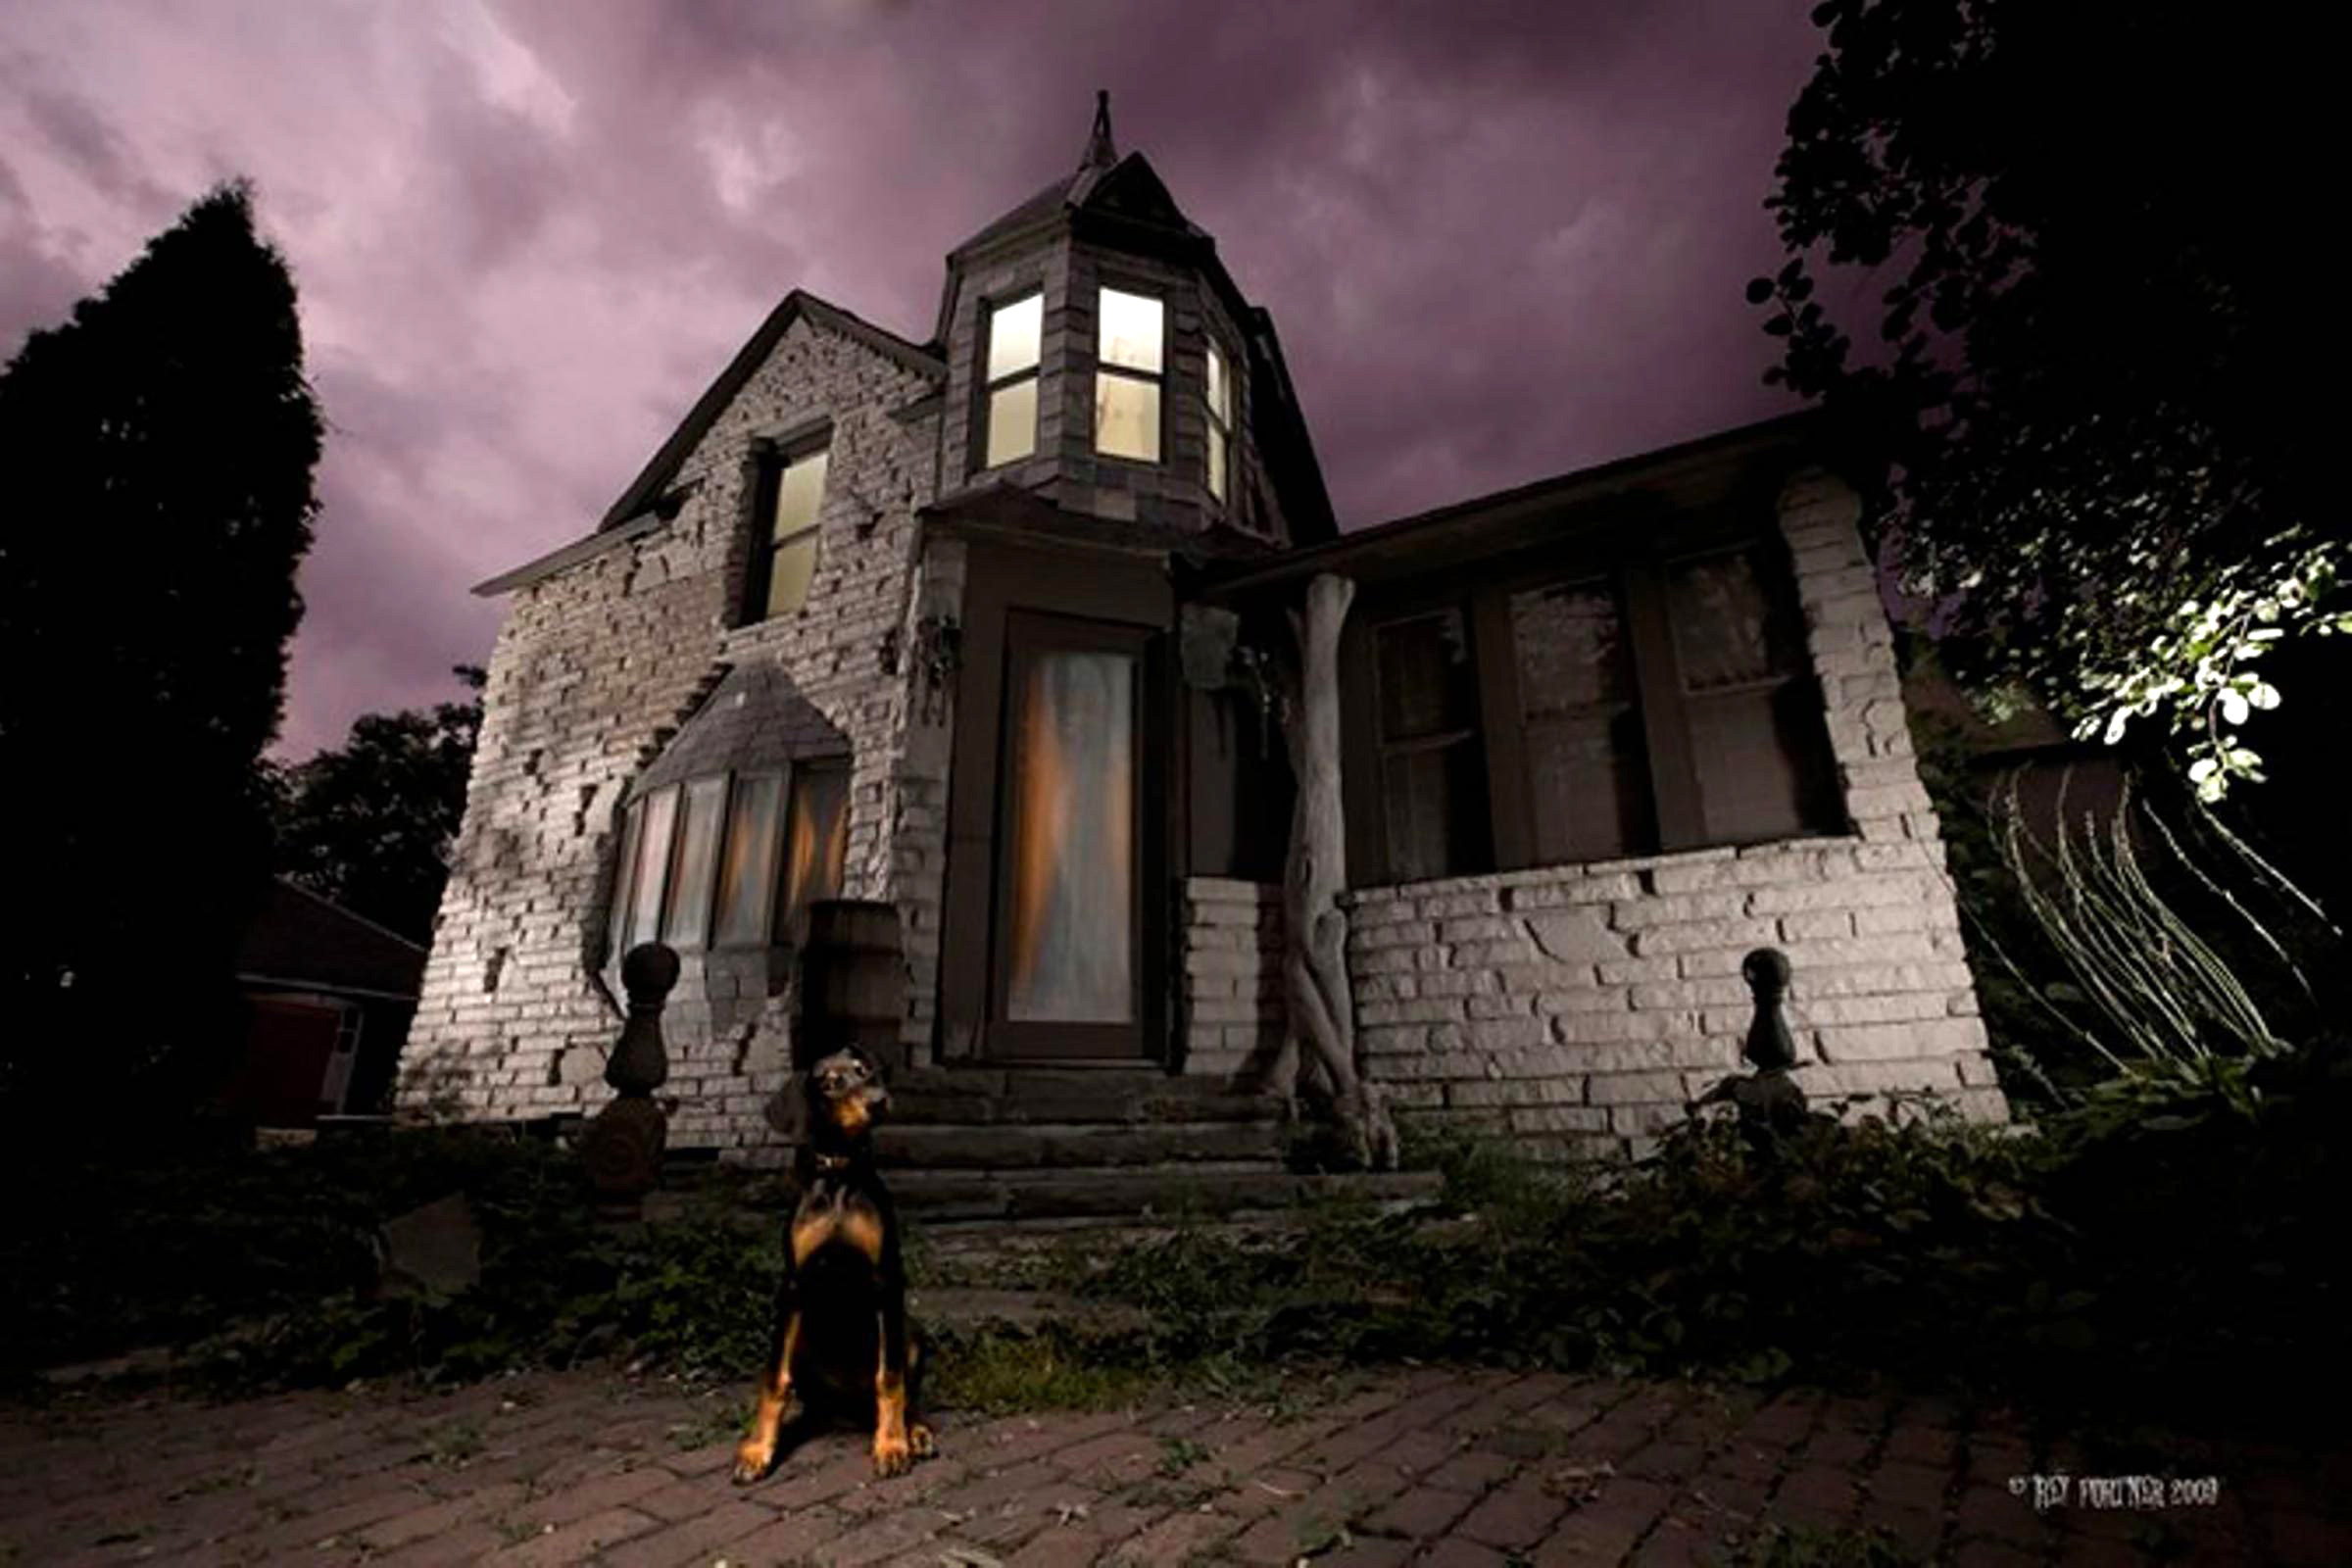 Horror haunted house, hospital-themed secret room escape Stock